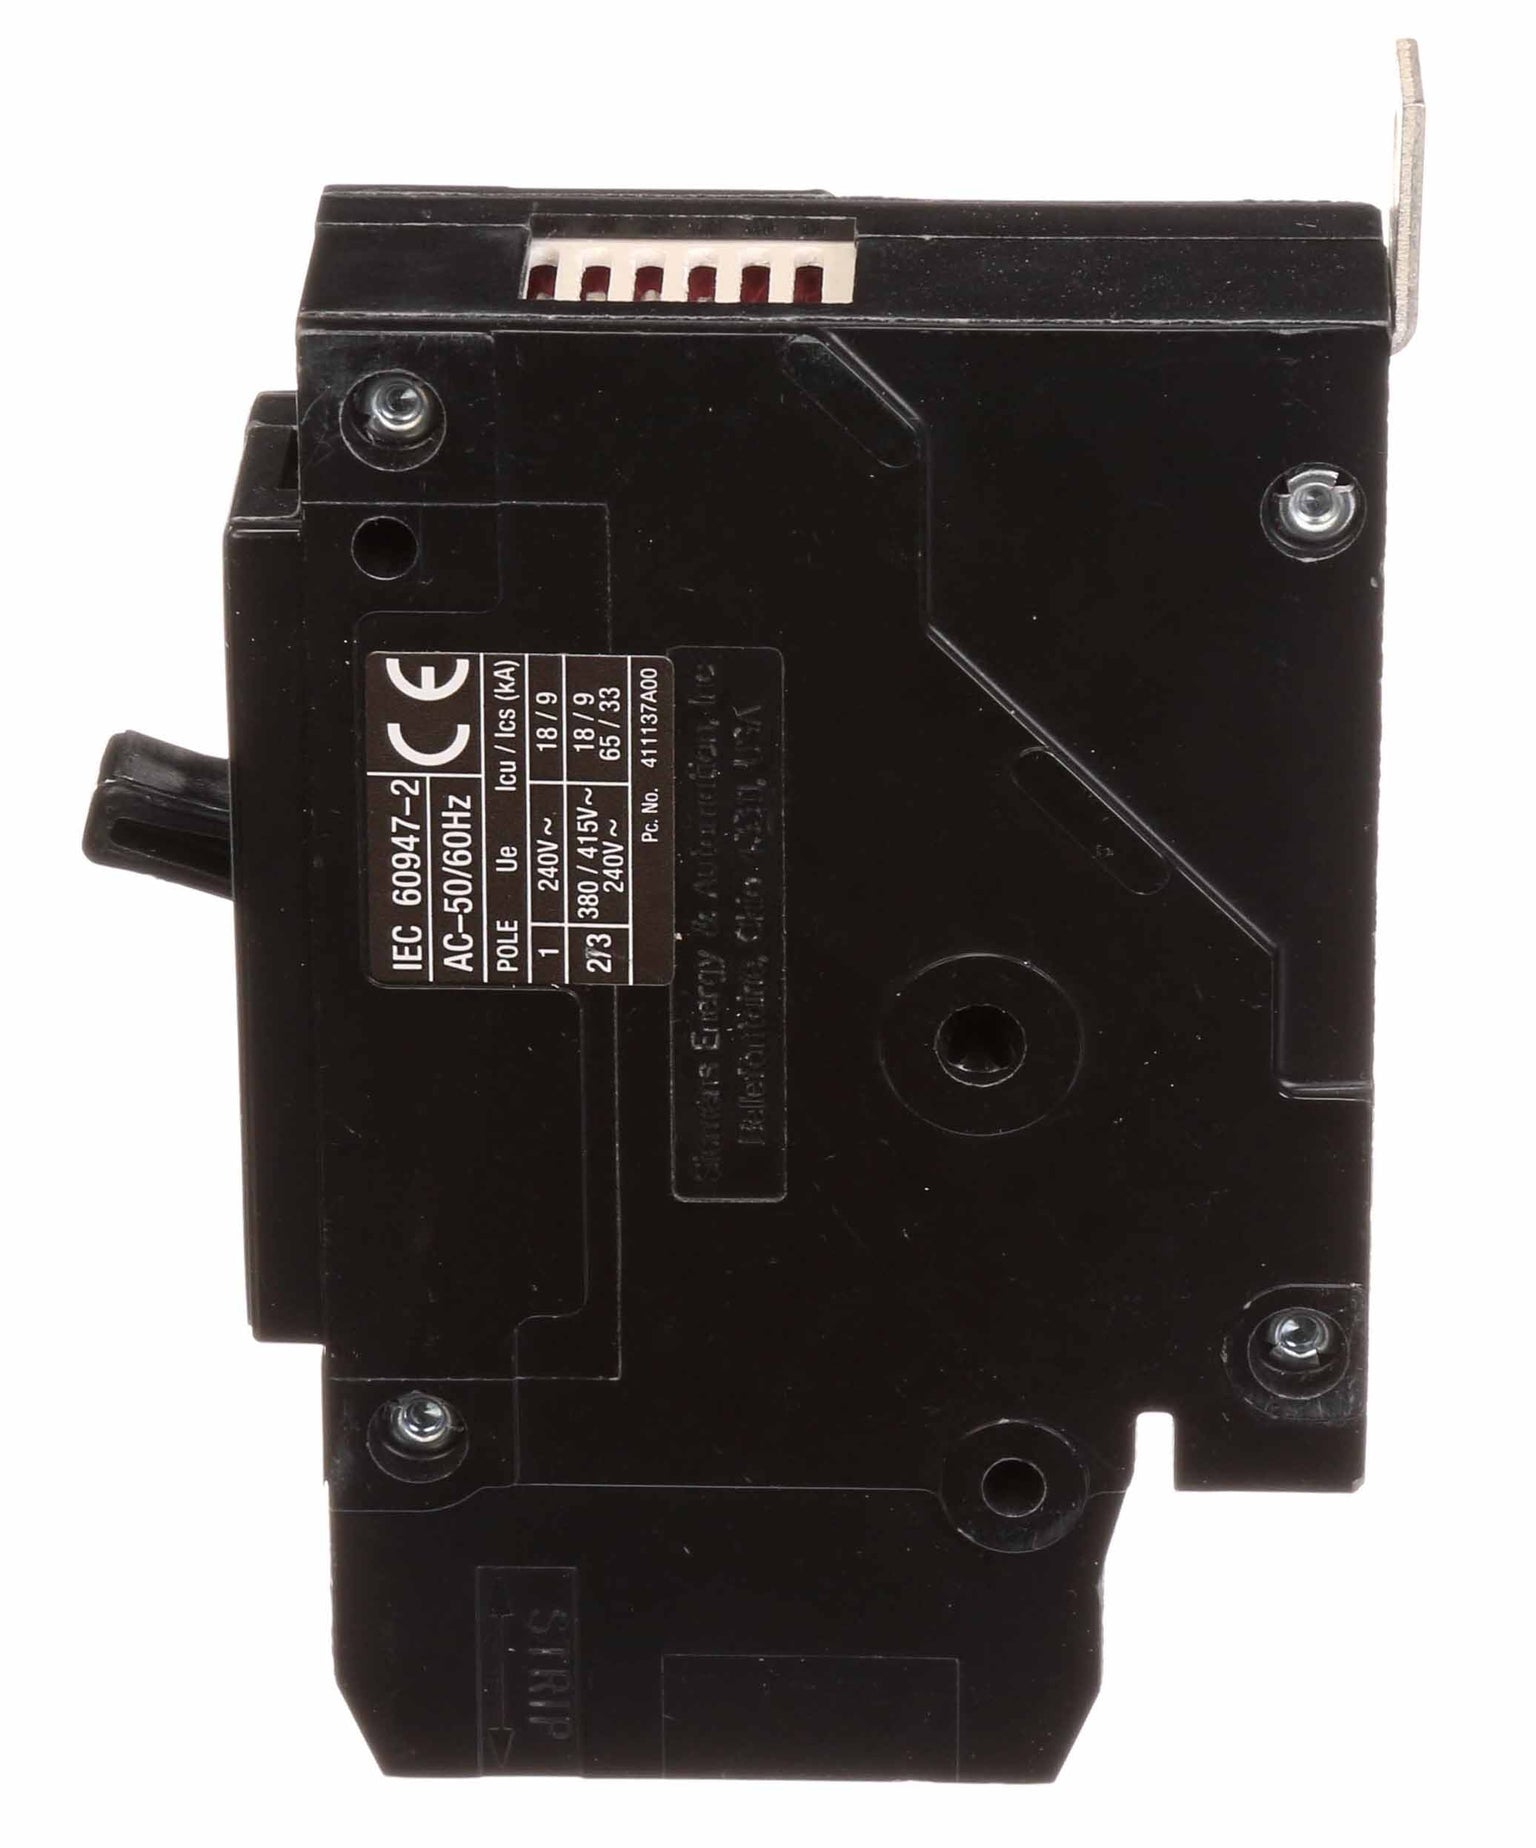 BQD135 - Siemens - 35 Amp Molded Case Circuit Breaker